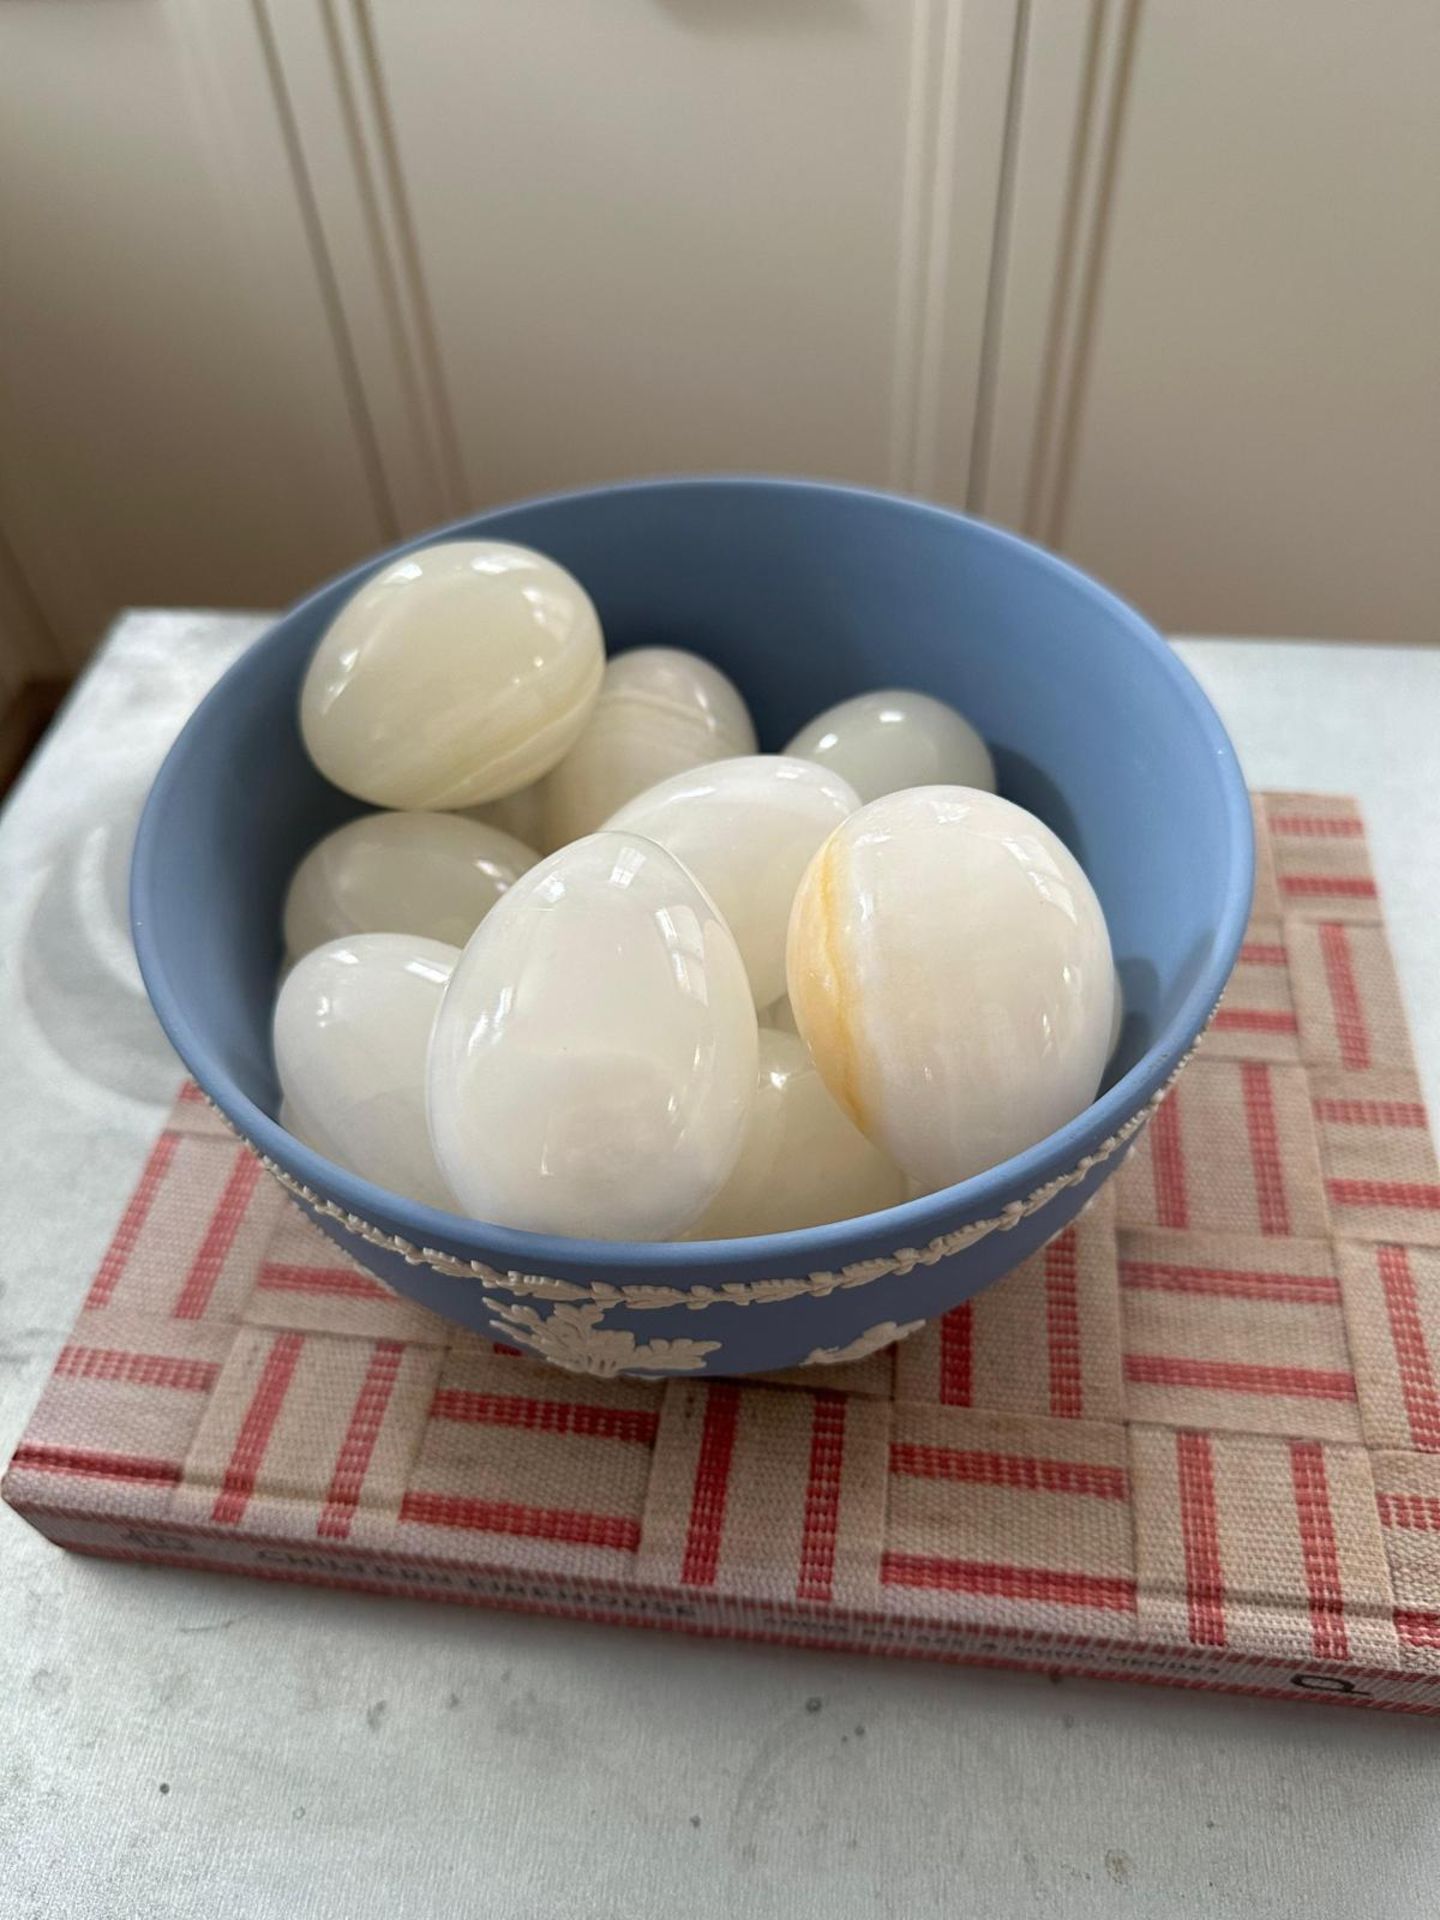 White Marble Eggs Decorative Objets (Apt 1) - Image 3 of 3